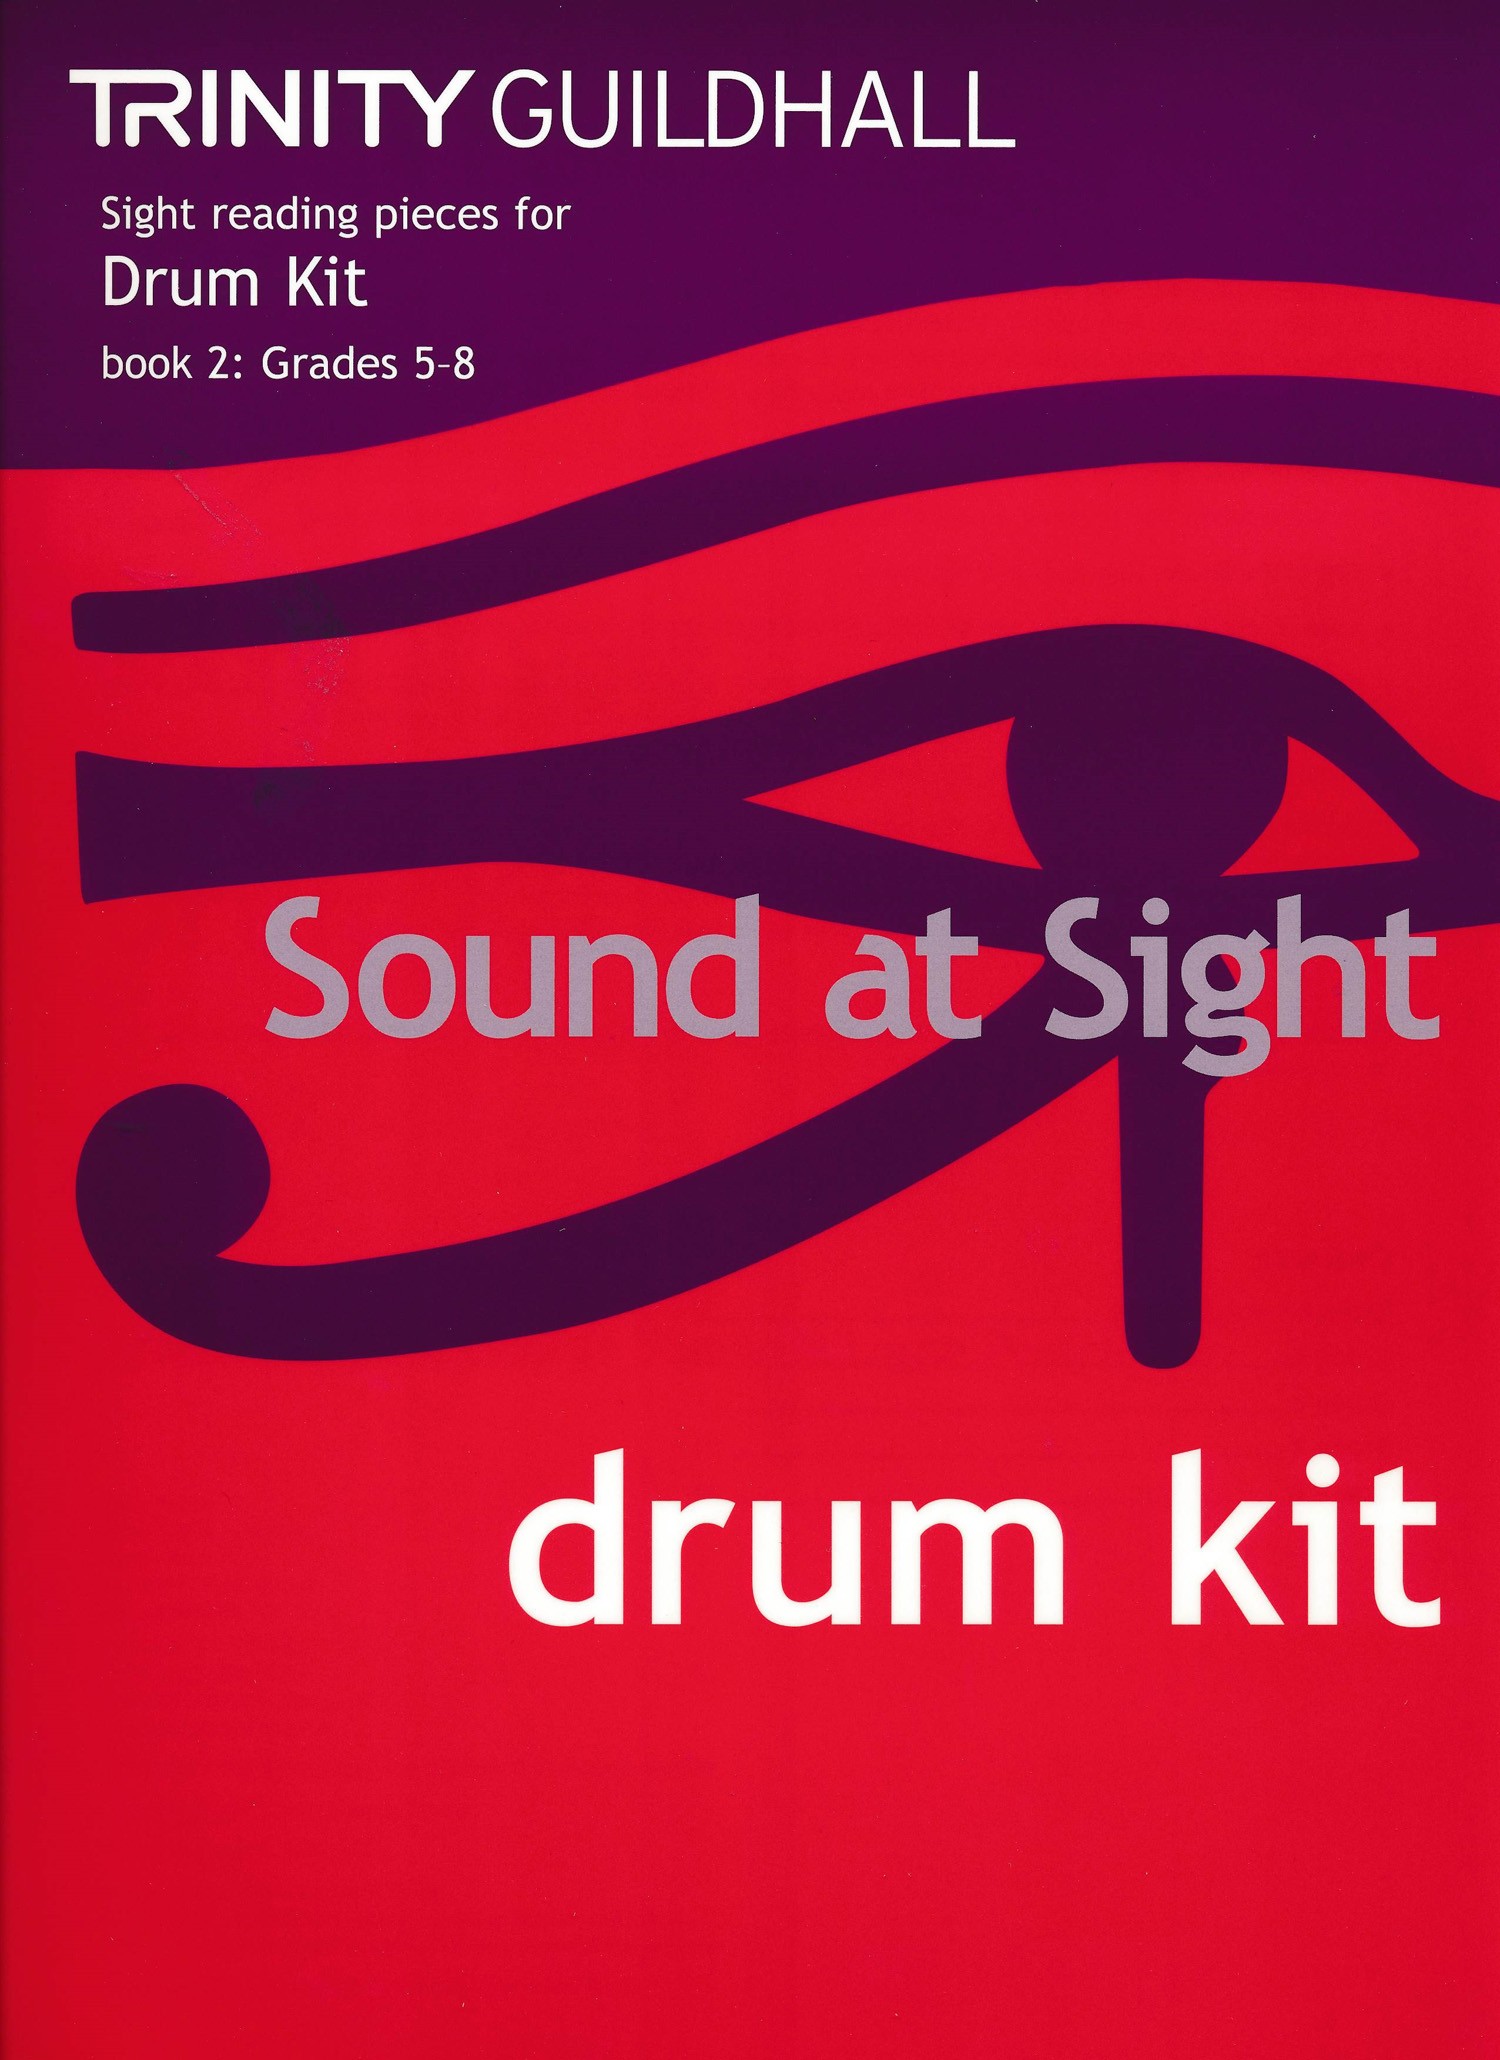 Sound at Sight - Drum Kit (Grades 5-8)